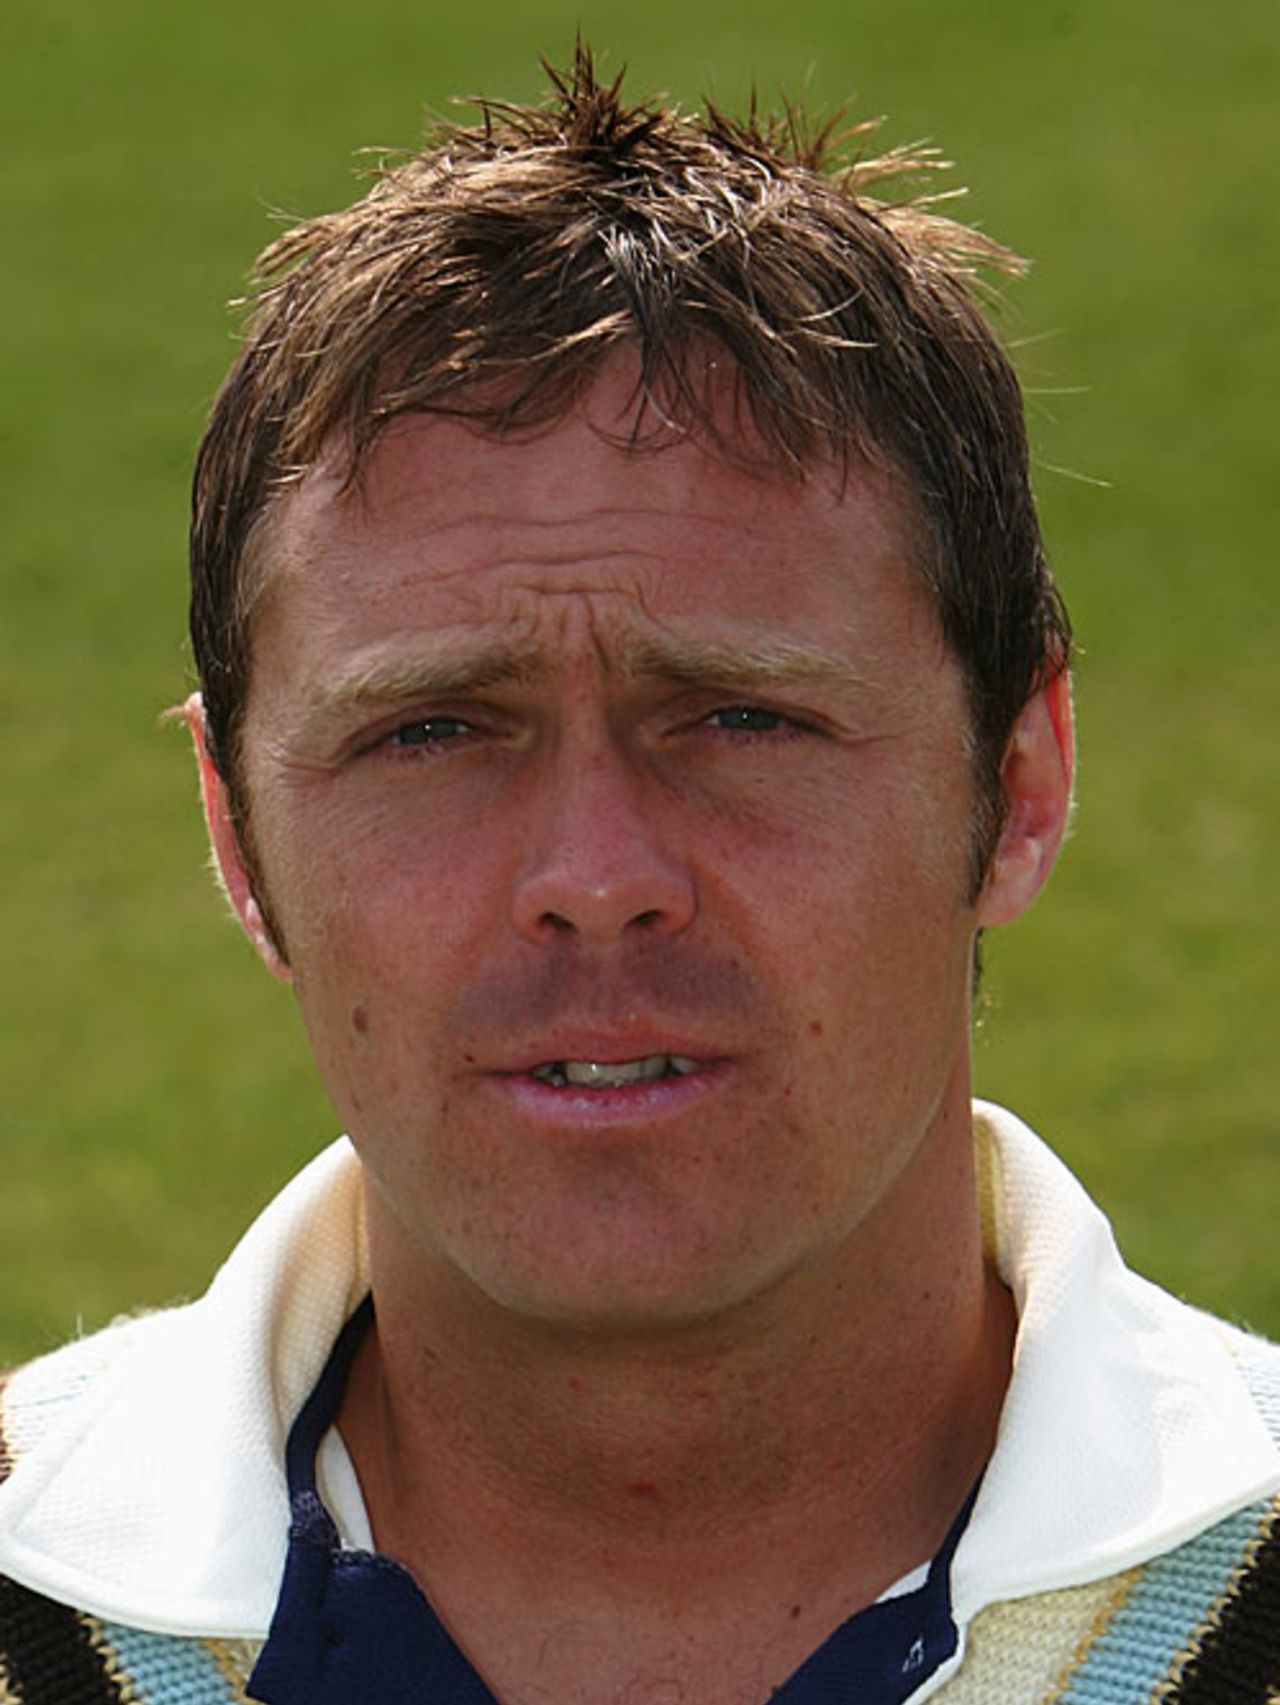 James Pipe, 2007 player portrait